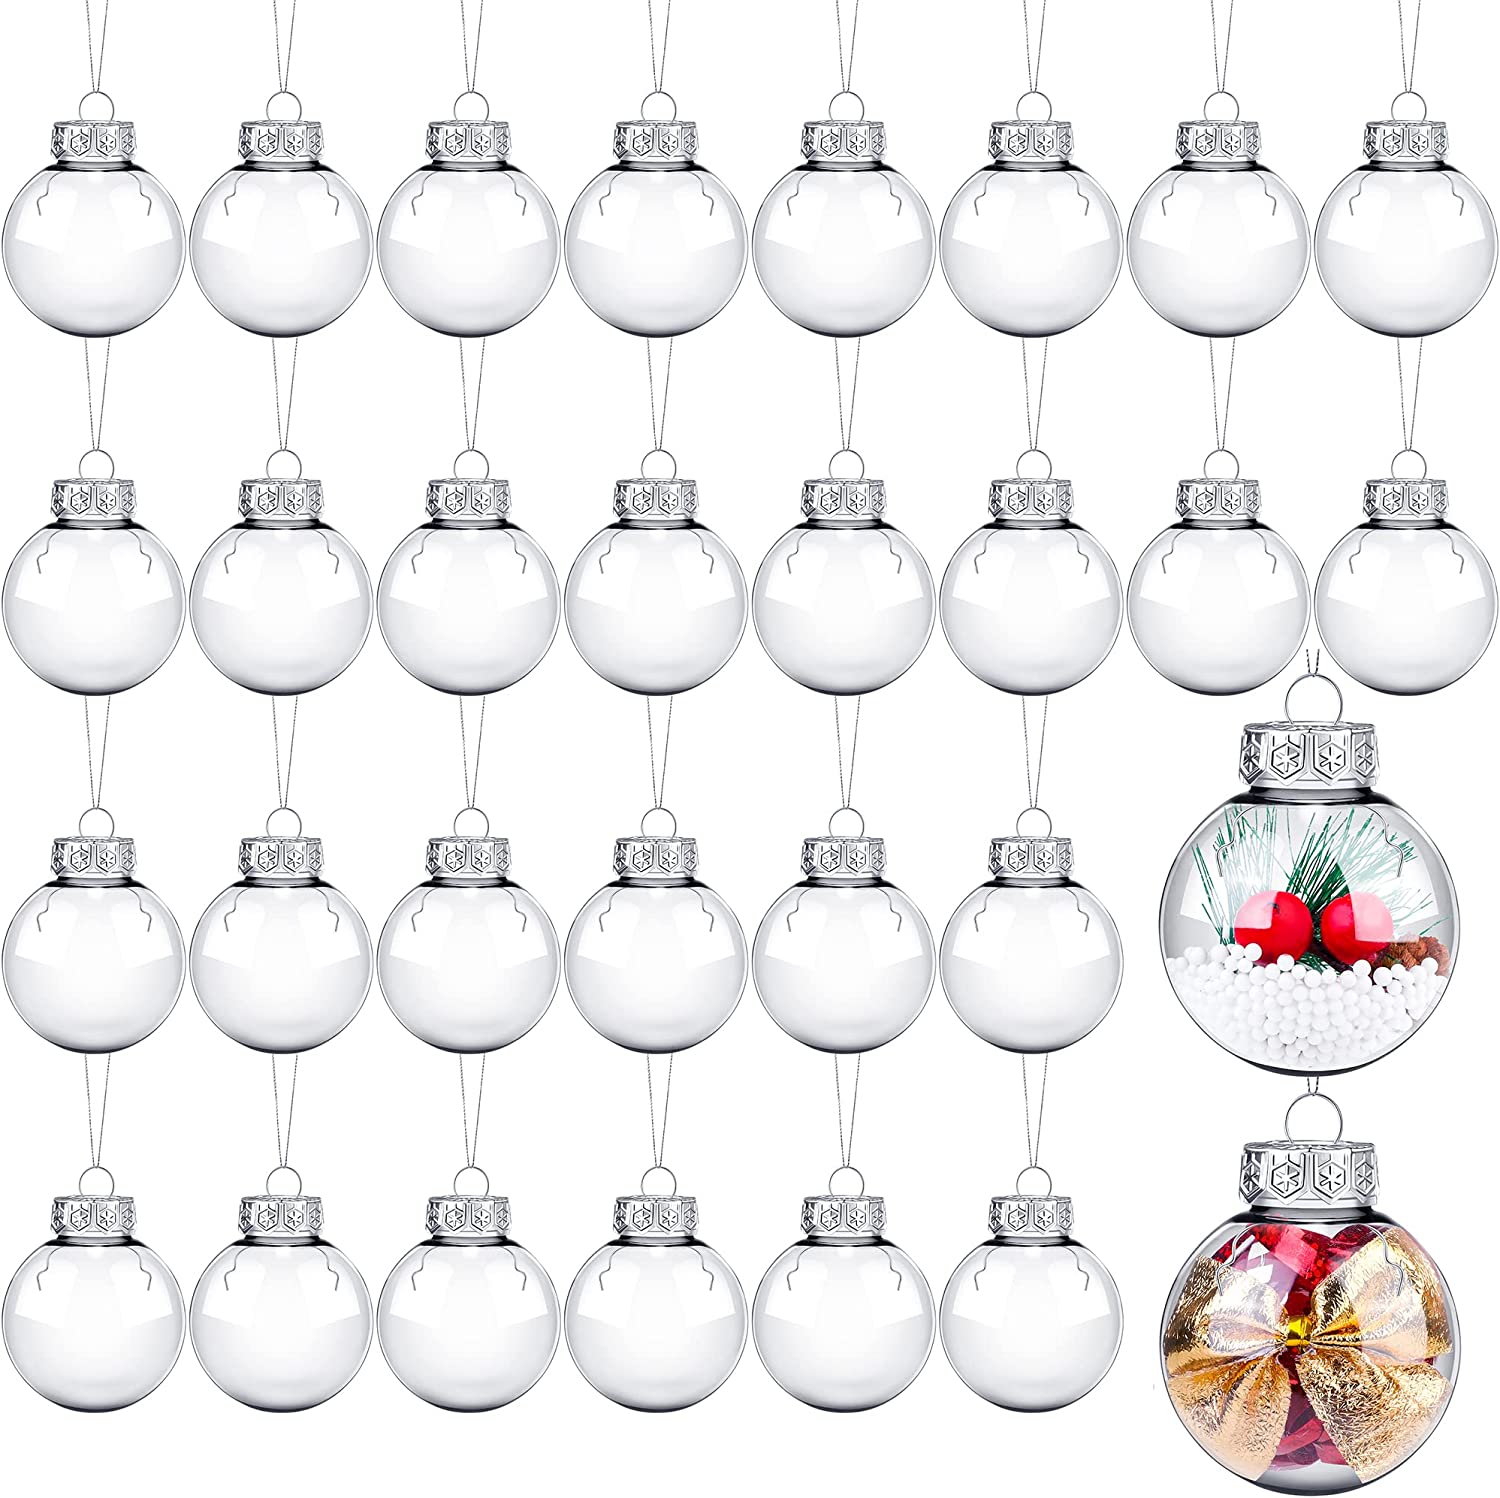  Neioaas 2.36Inch Clear Plastic Balls Ornaments - DIY Fillable  Christmas Ornaments Balls, 12 PCS Clear Plastic Ornament Balls for Christmas,  Halloween, Birthday, Wedding Decorative, Crafts Decorative : Home & Kitchen